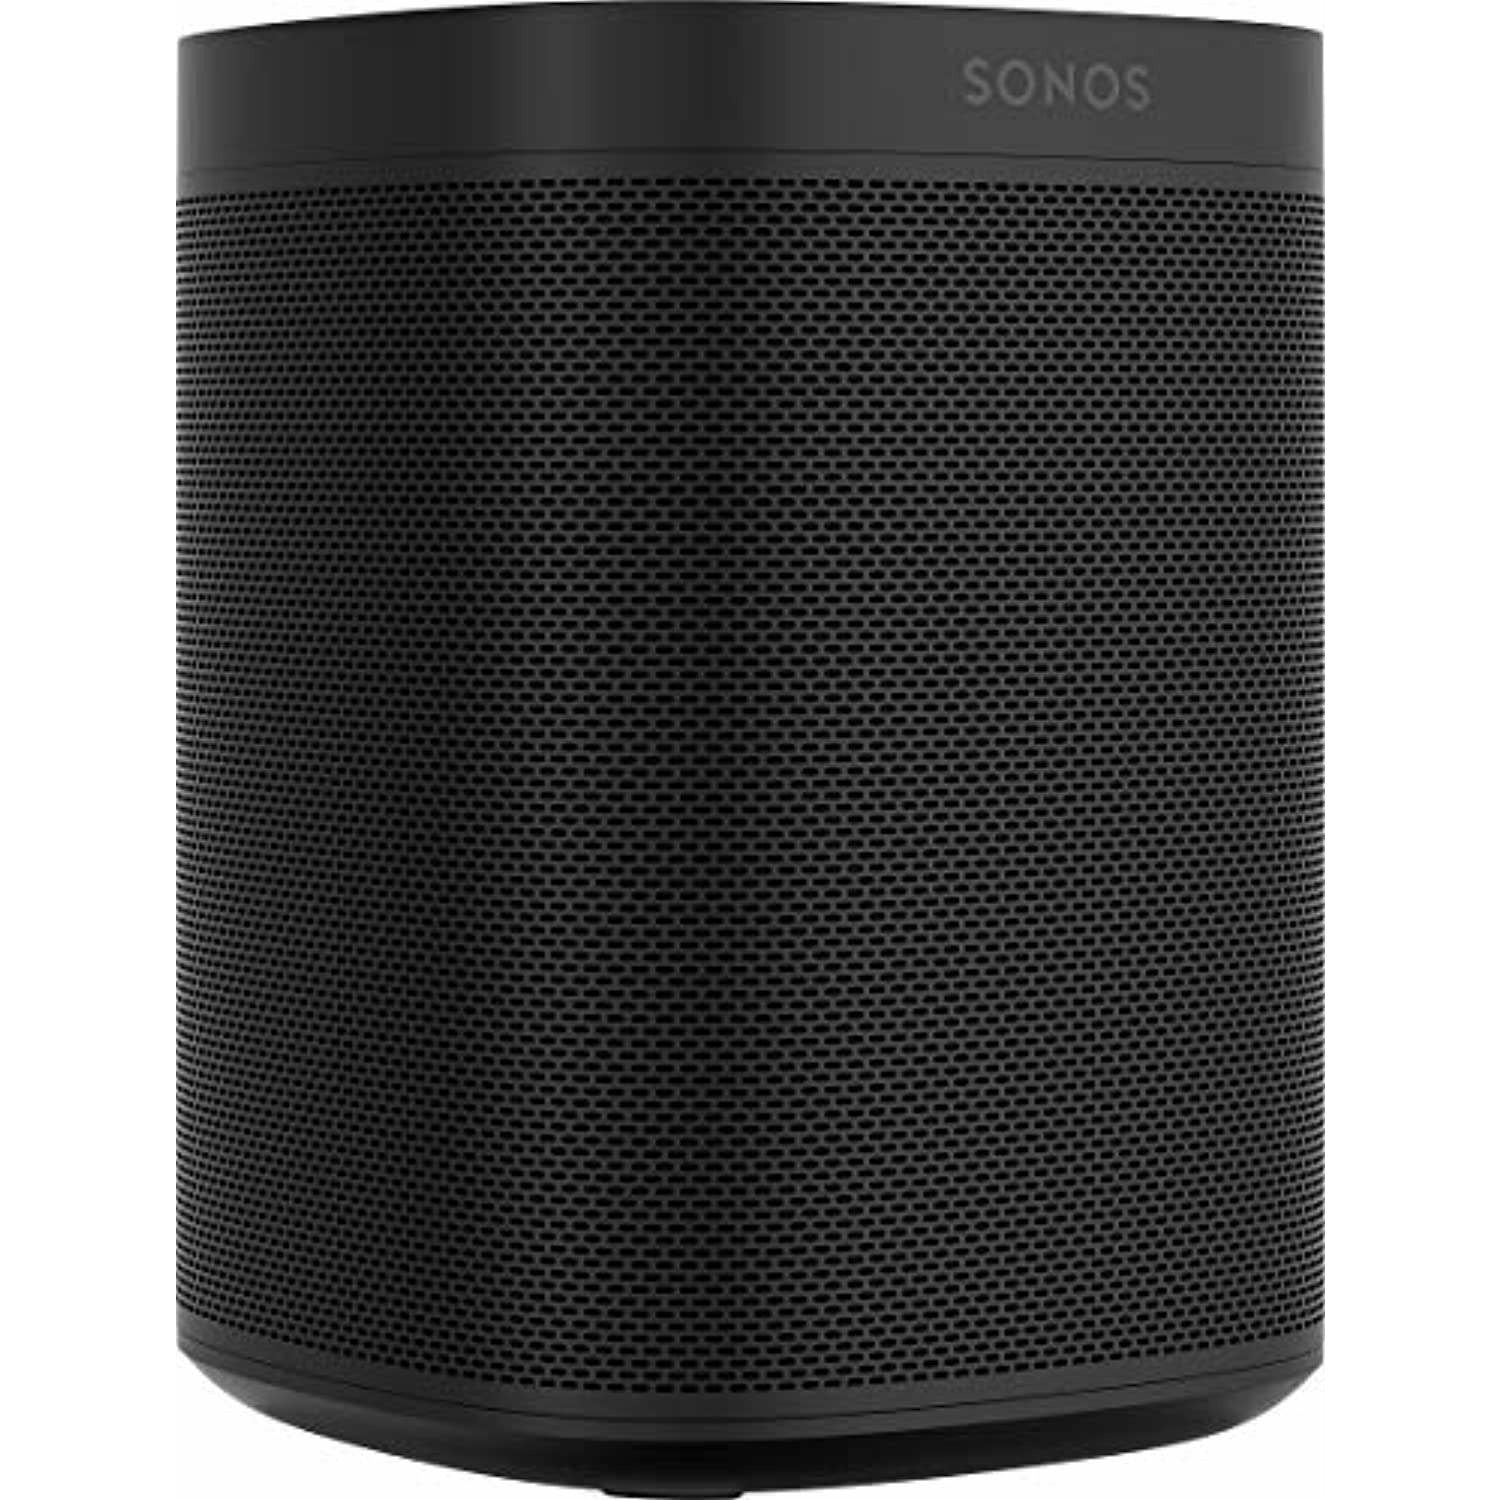 Sonos One (Gen 2) - Voice Controlled Smart Speaker with Built-in